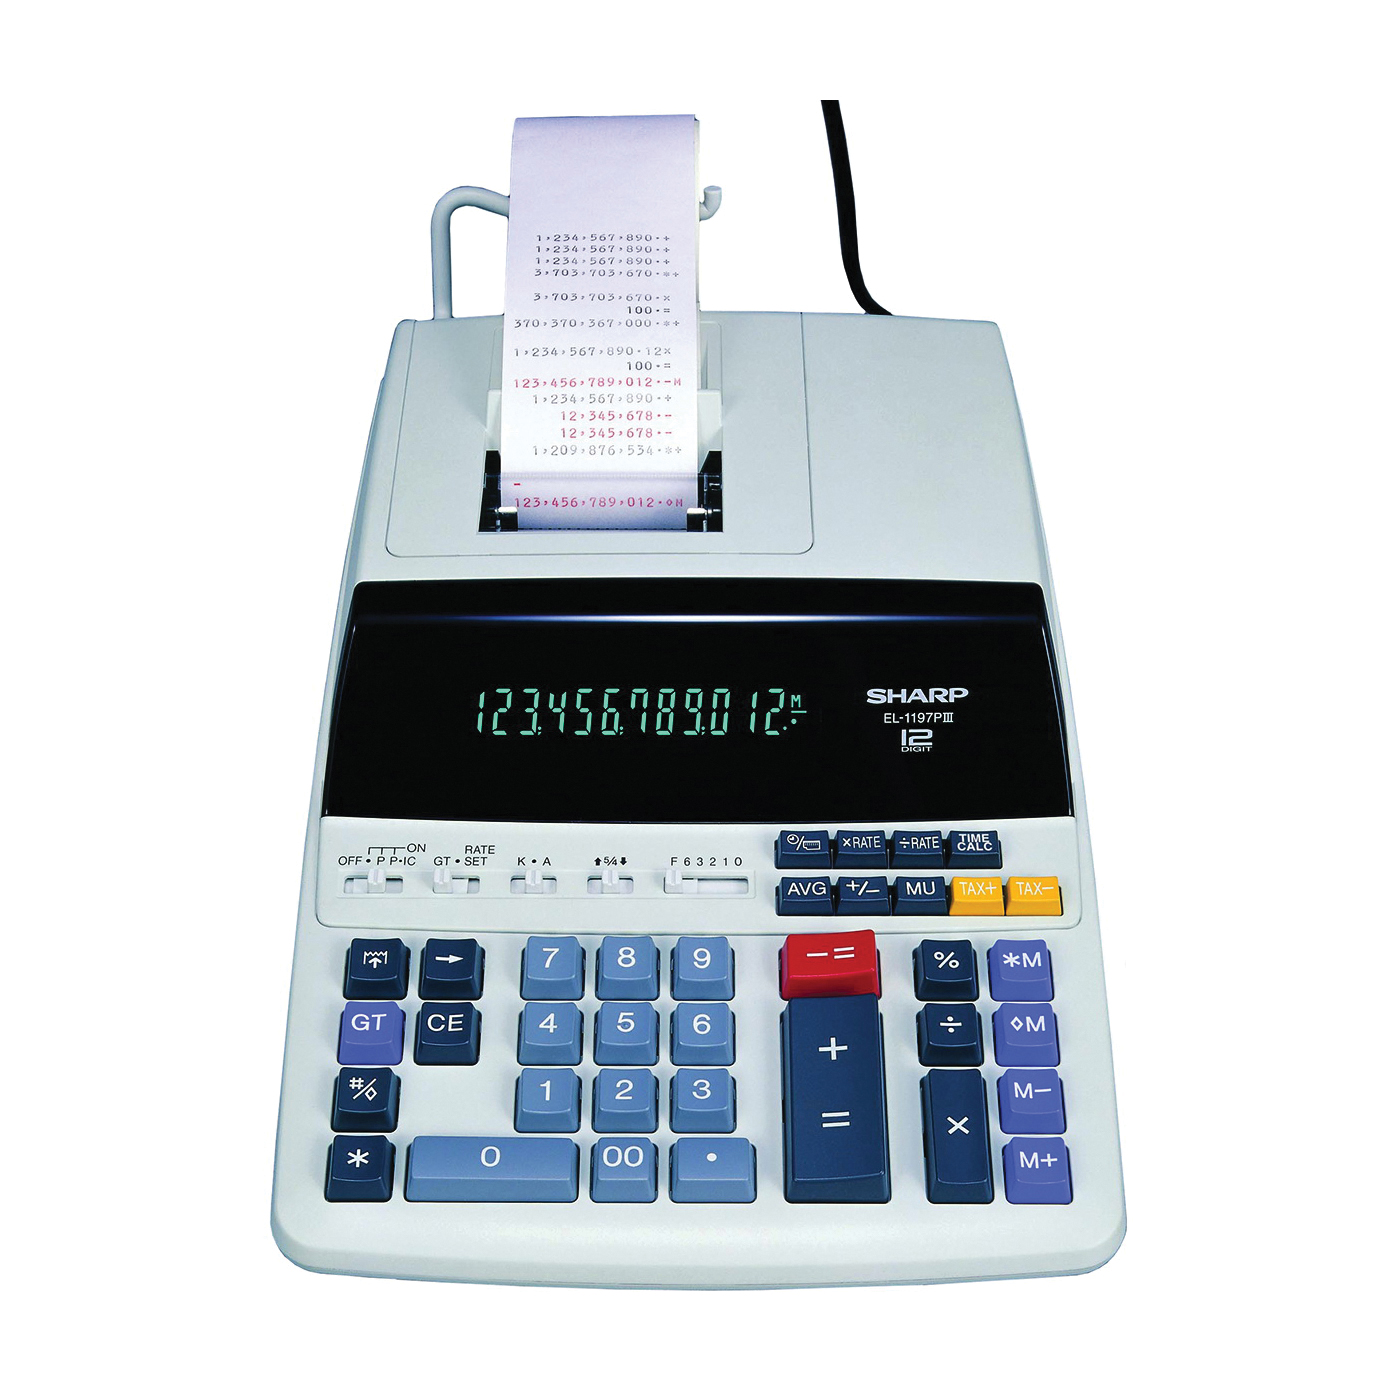 EL1197PIII Printing Calculator, 12 Display, Fluorescent Display, Off-White